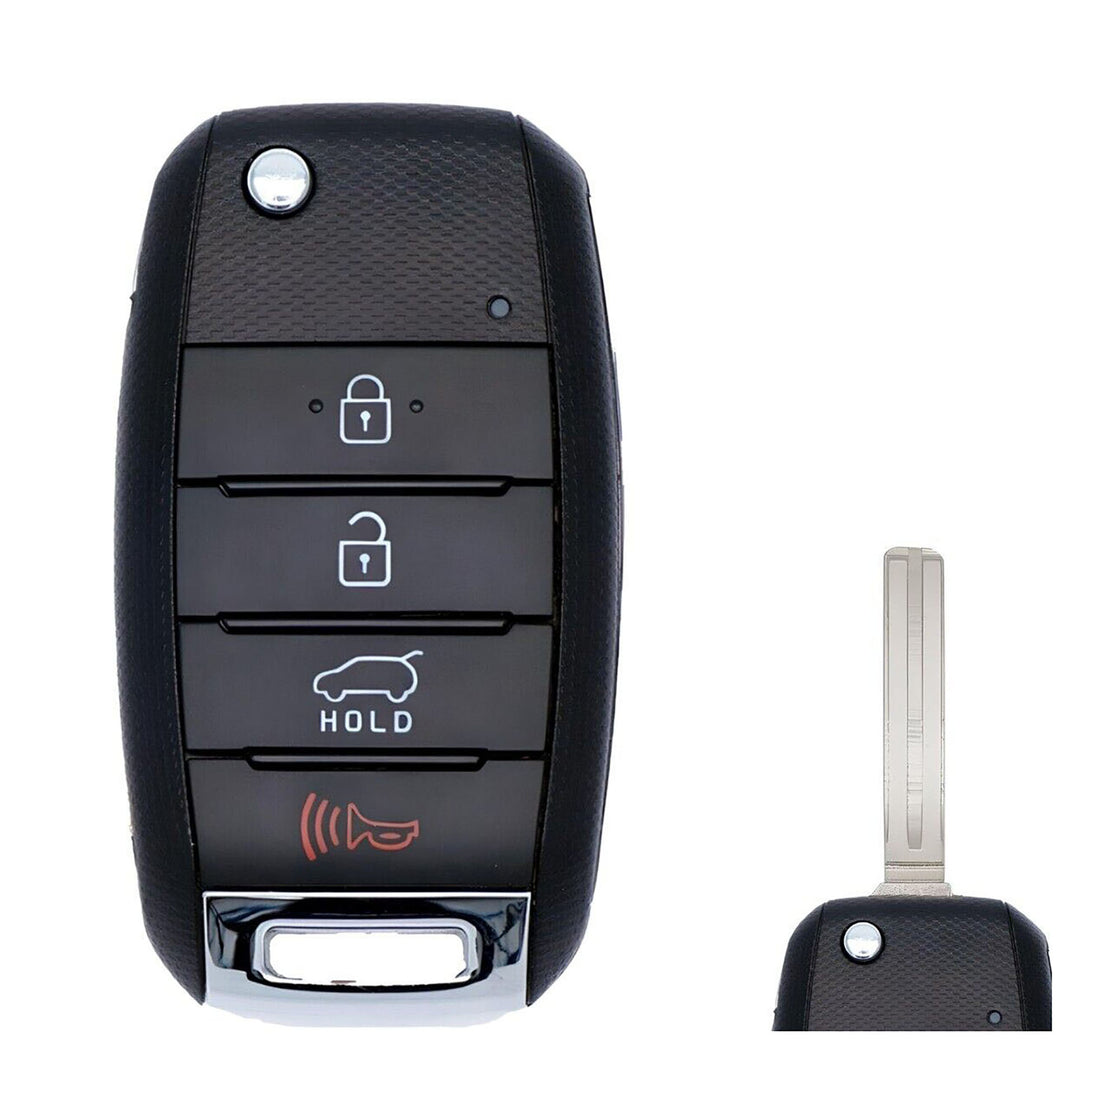 1x New Replacement Key Fob Remote Compatible with & Fit For 2013-2015 Kia Sorento - TQ8RKE-3F05 - MPN TQ8-RKE-3F05-02